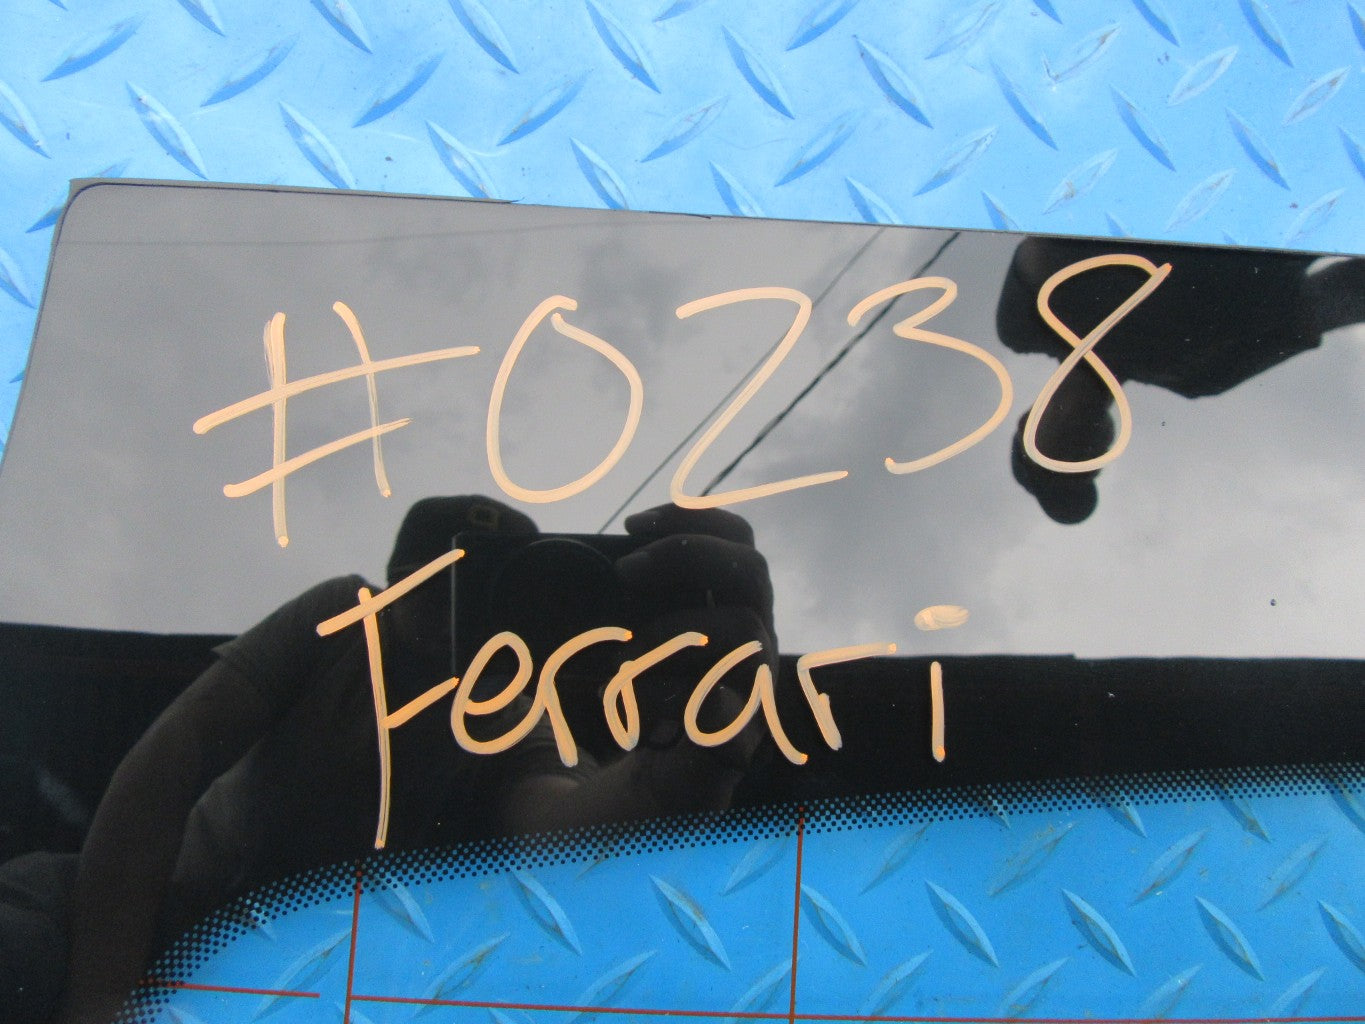 Ferrari 812 Superfast rear back glass backglass #0238